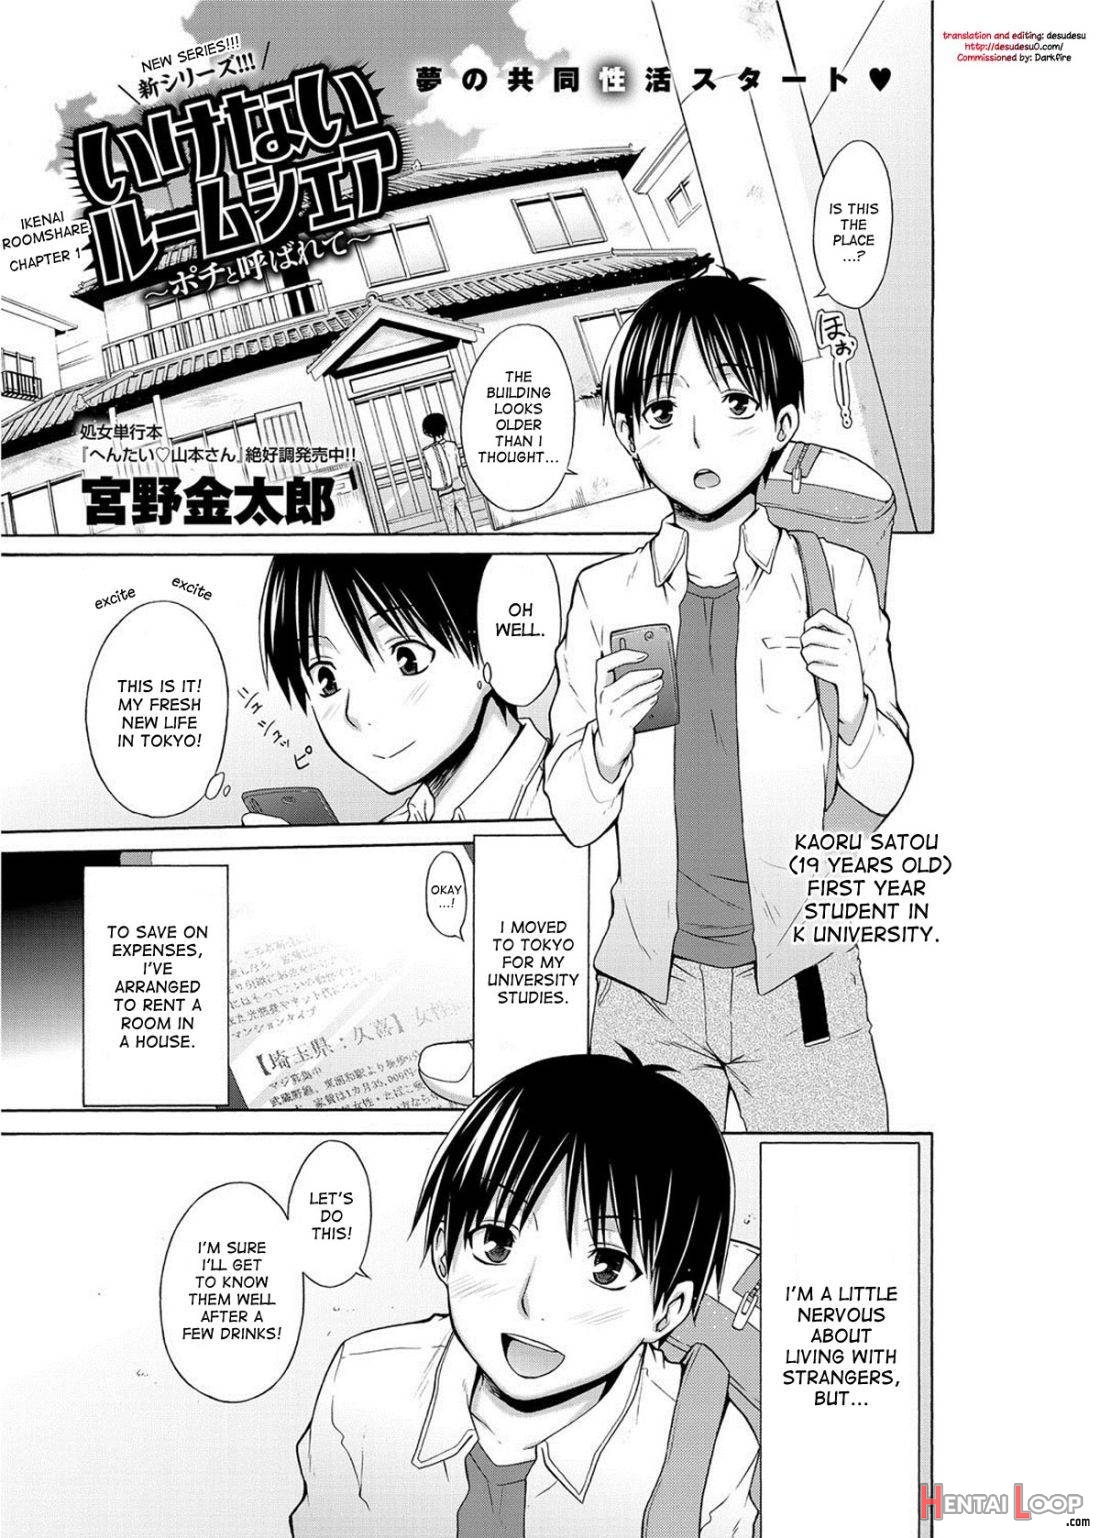 Ikenai Roomshare page 1